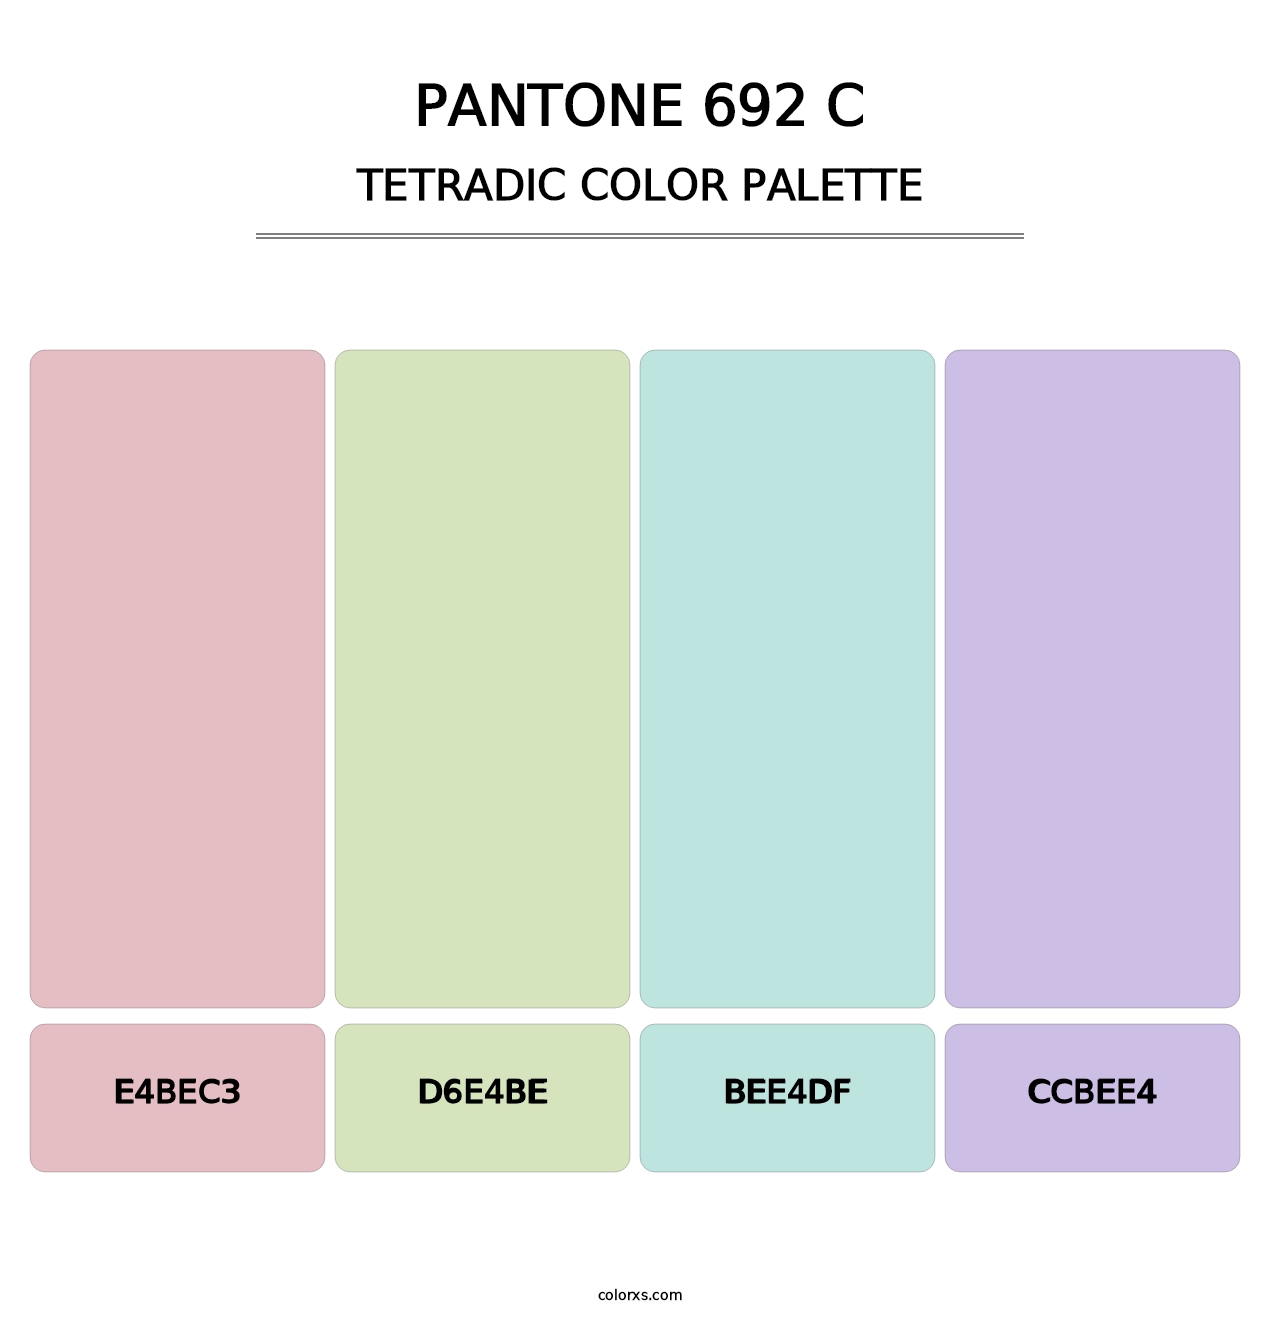 PANTONE 692 C - Tetradic Color Palette